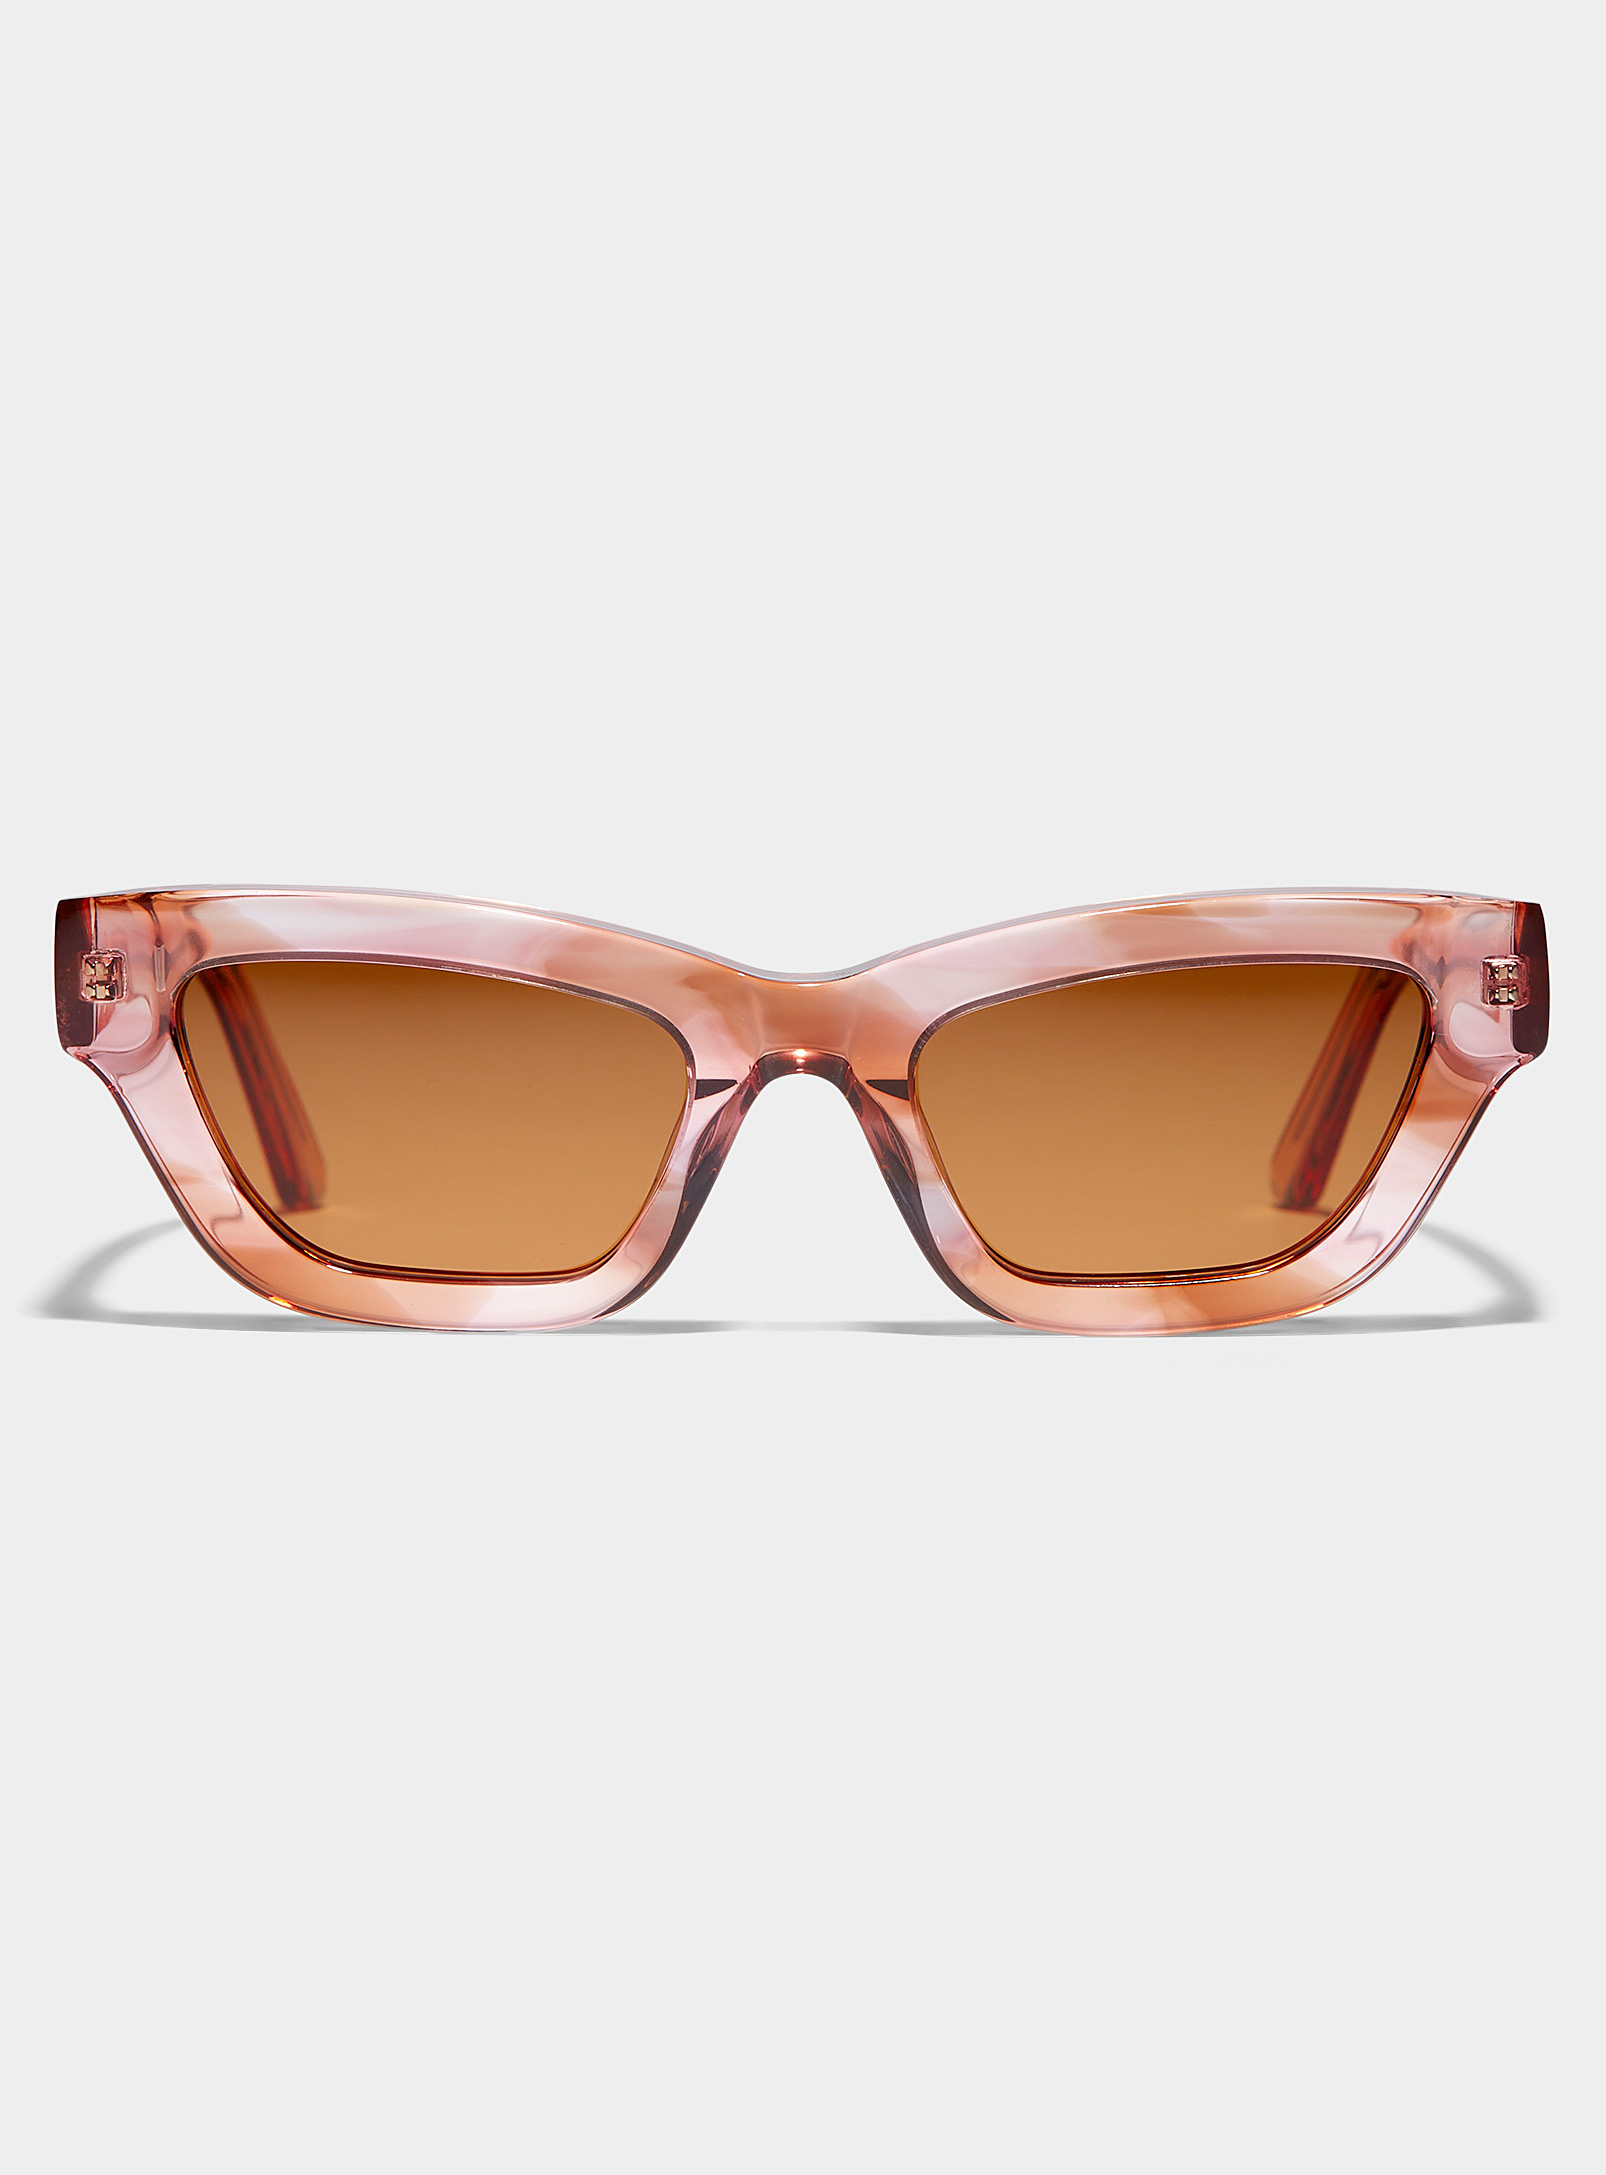 French Kiwis Jade Rectangular Cat-eye Sunglasses In Pink